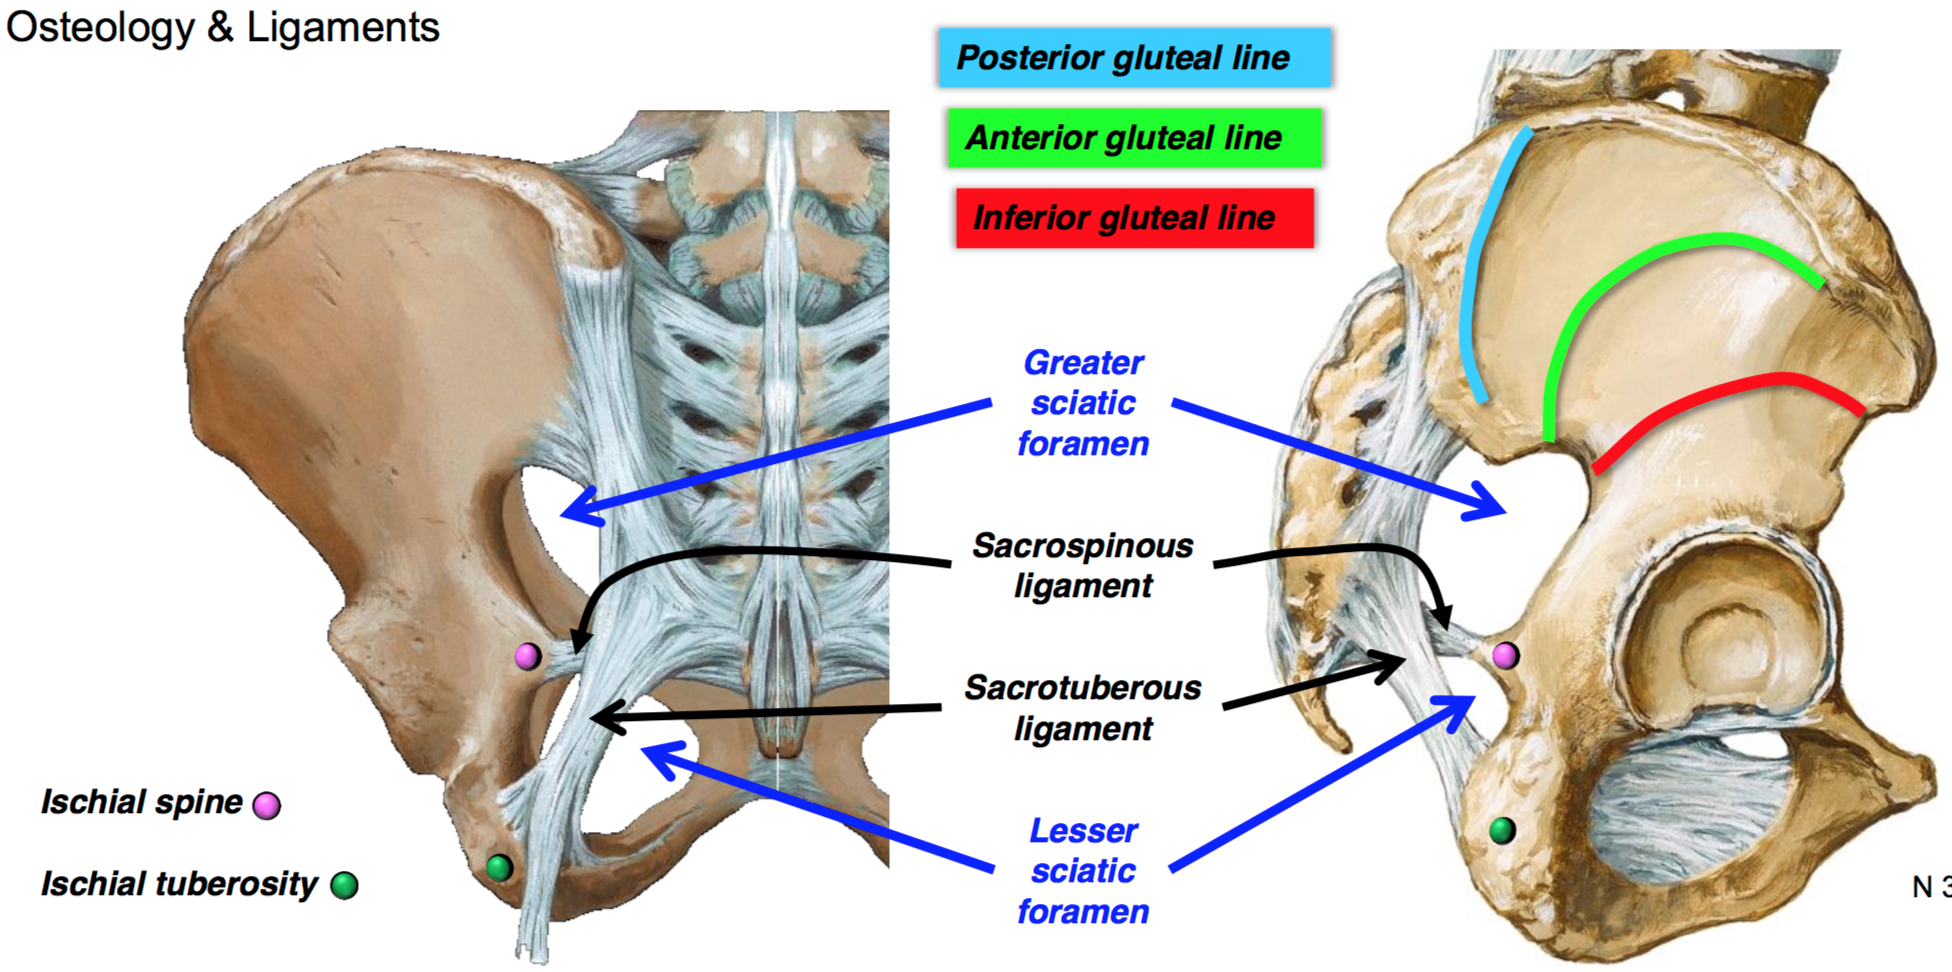 Greater sciatic foramen
Lesser sciatic foramen
Sacrospinous ligament
Sacrotuberous ligament
